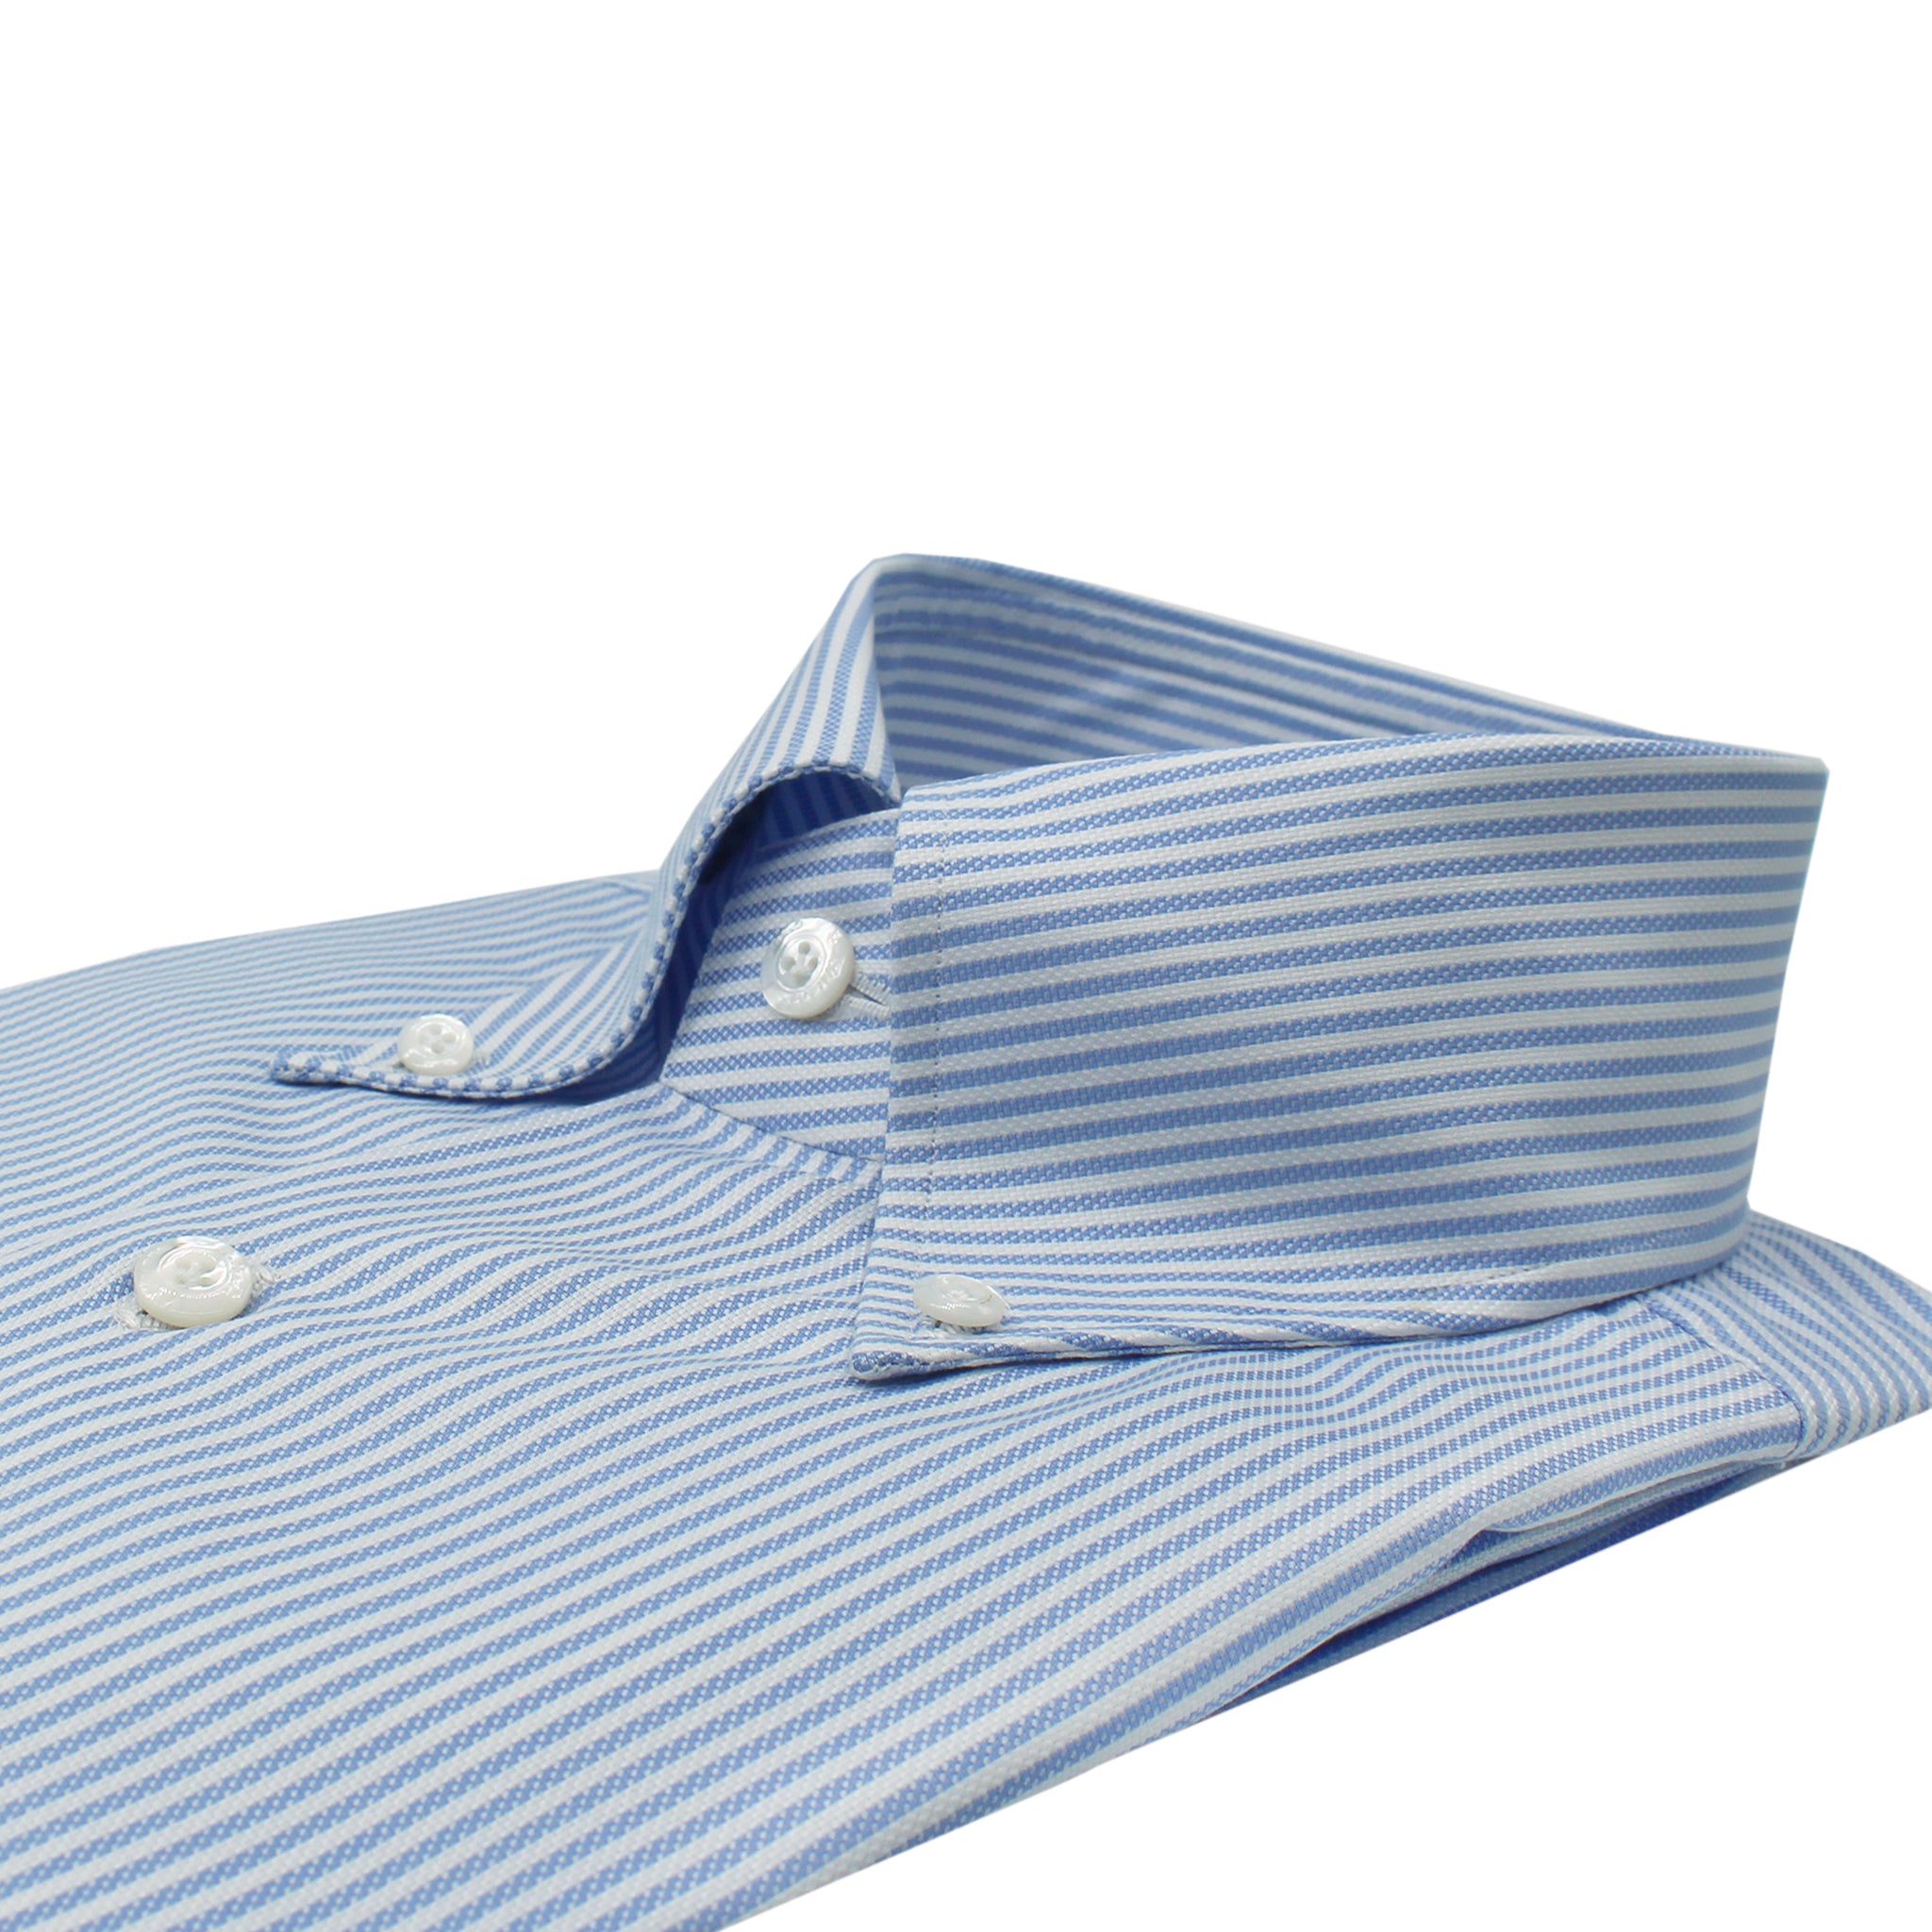 Naples striped button down cotton shirt Carlo Riva